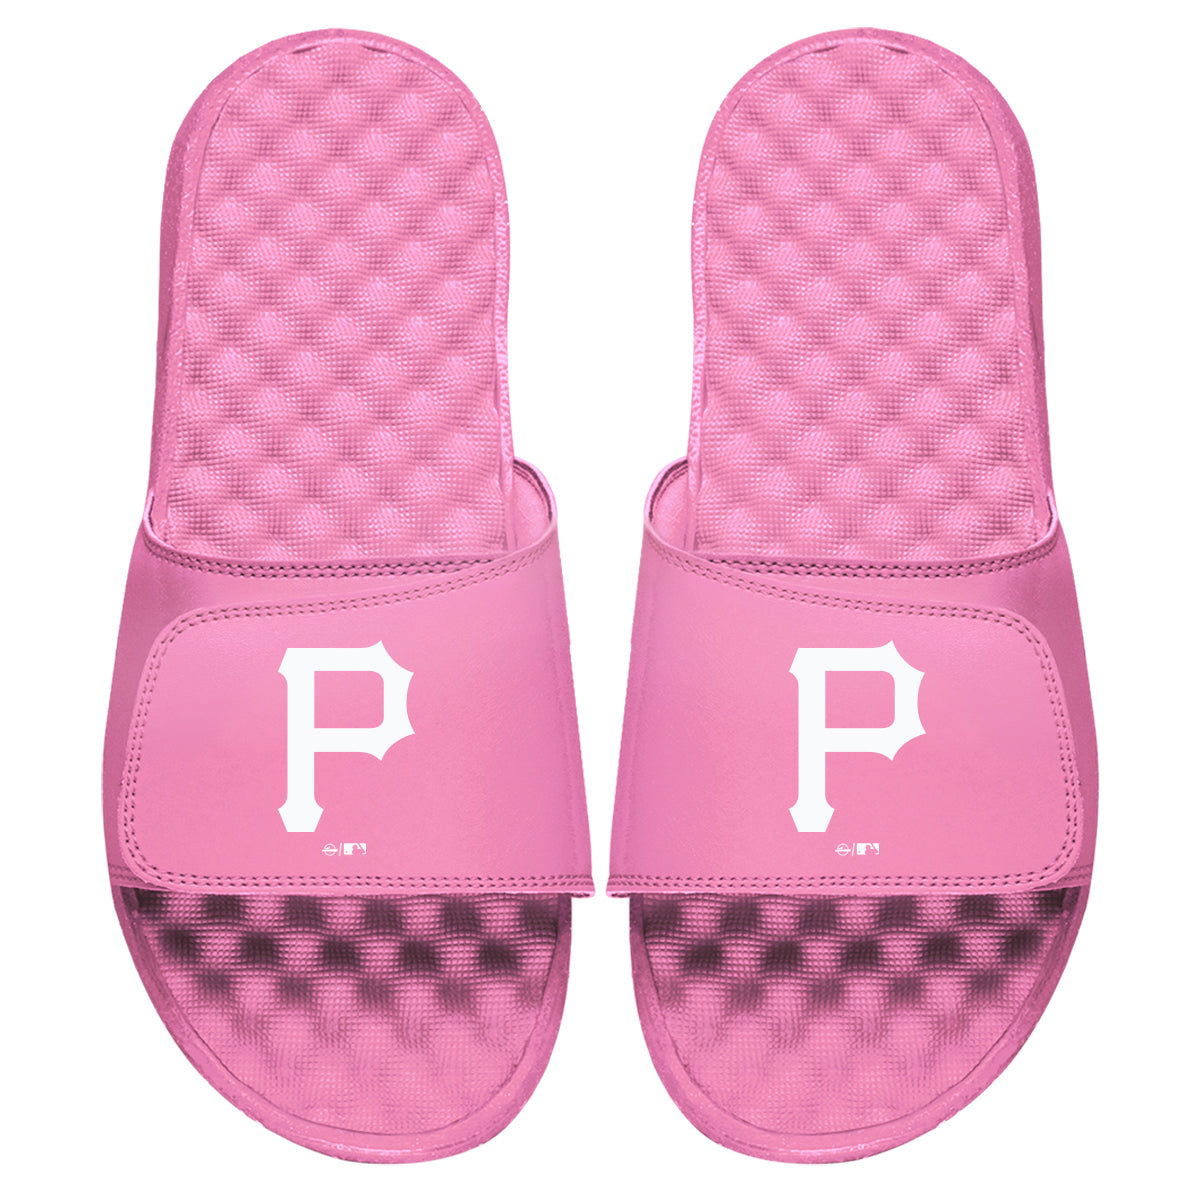 Pittsburgh Pirates Primary Pink Slides